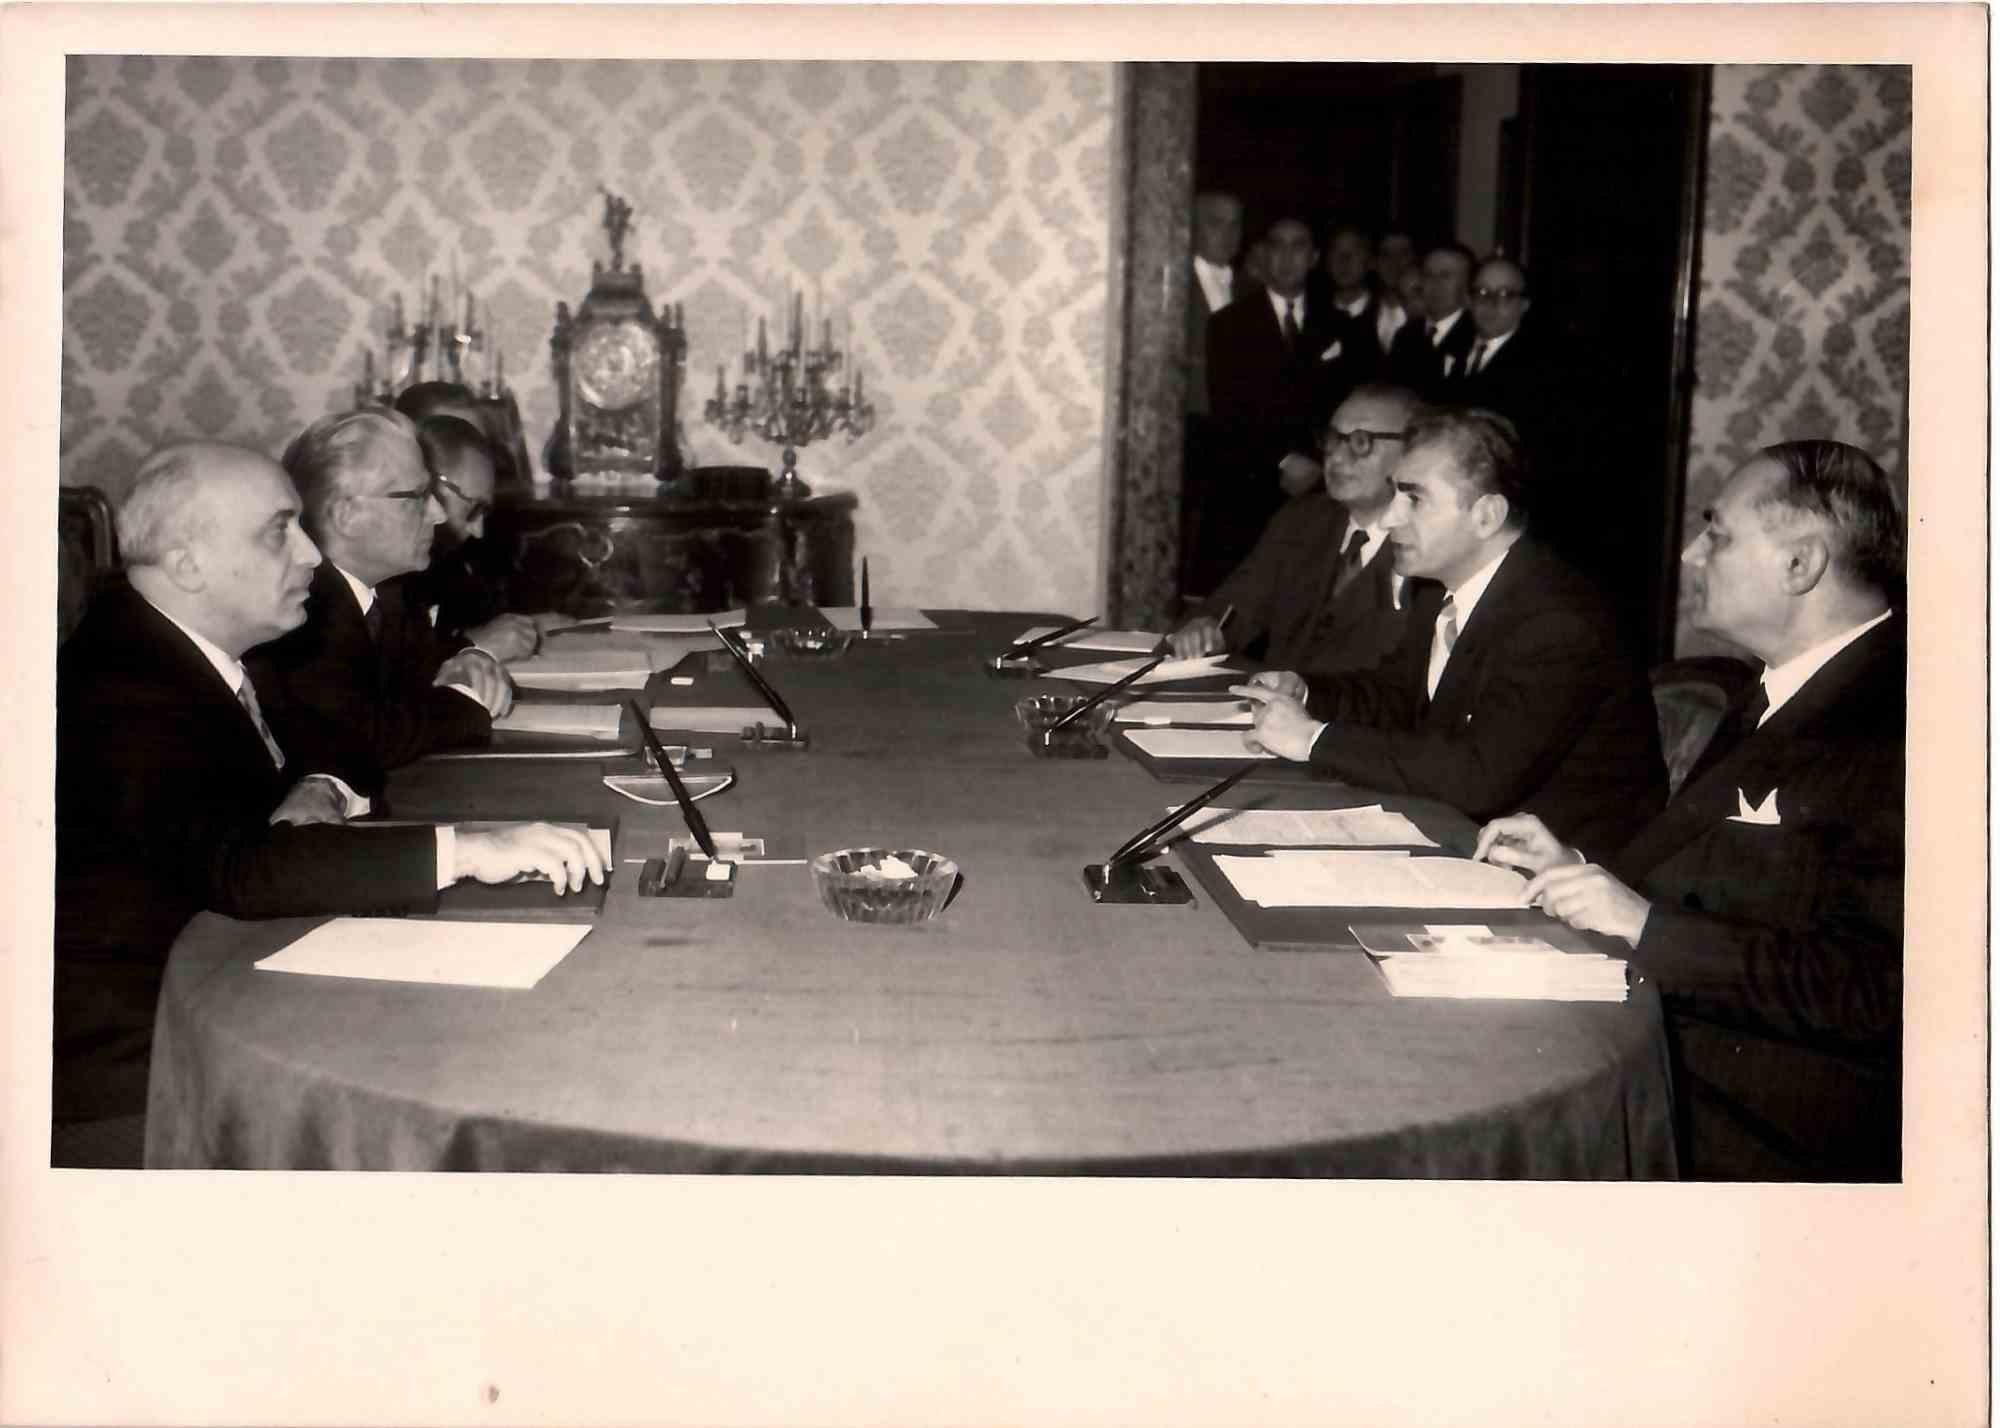 Italy-Iran Politicians Meeting - Vintage B/W photo - 1970s